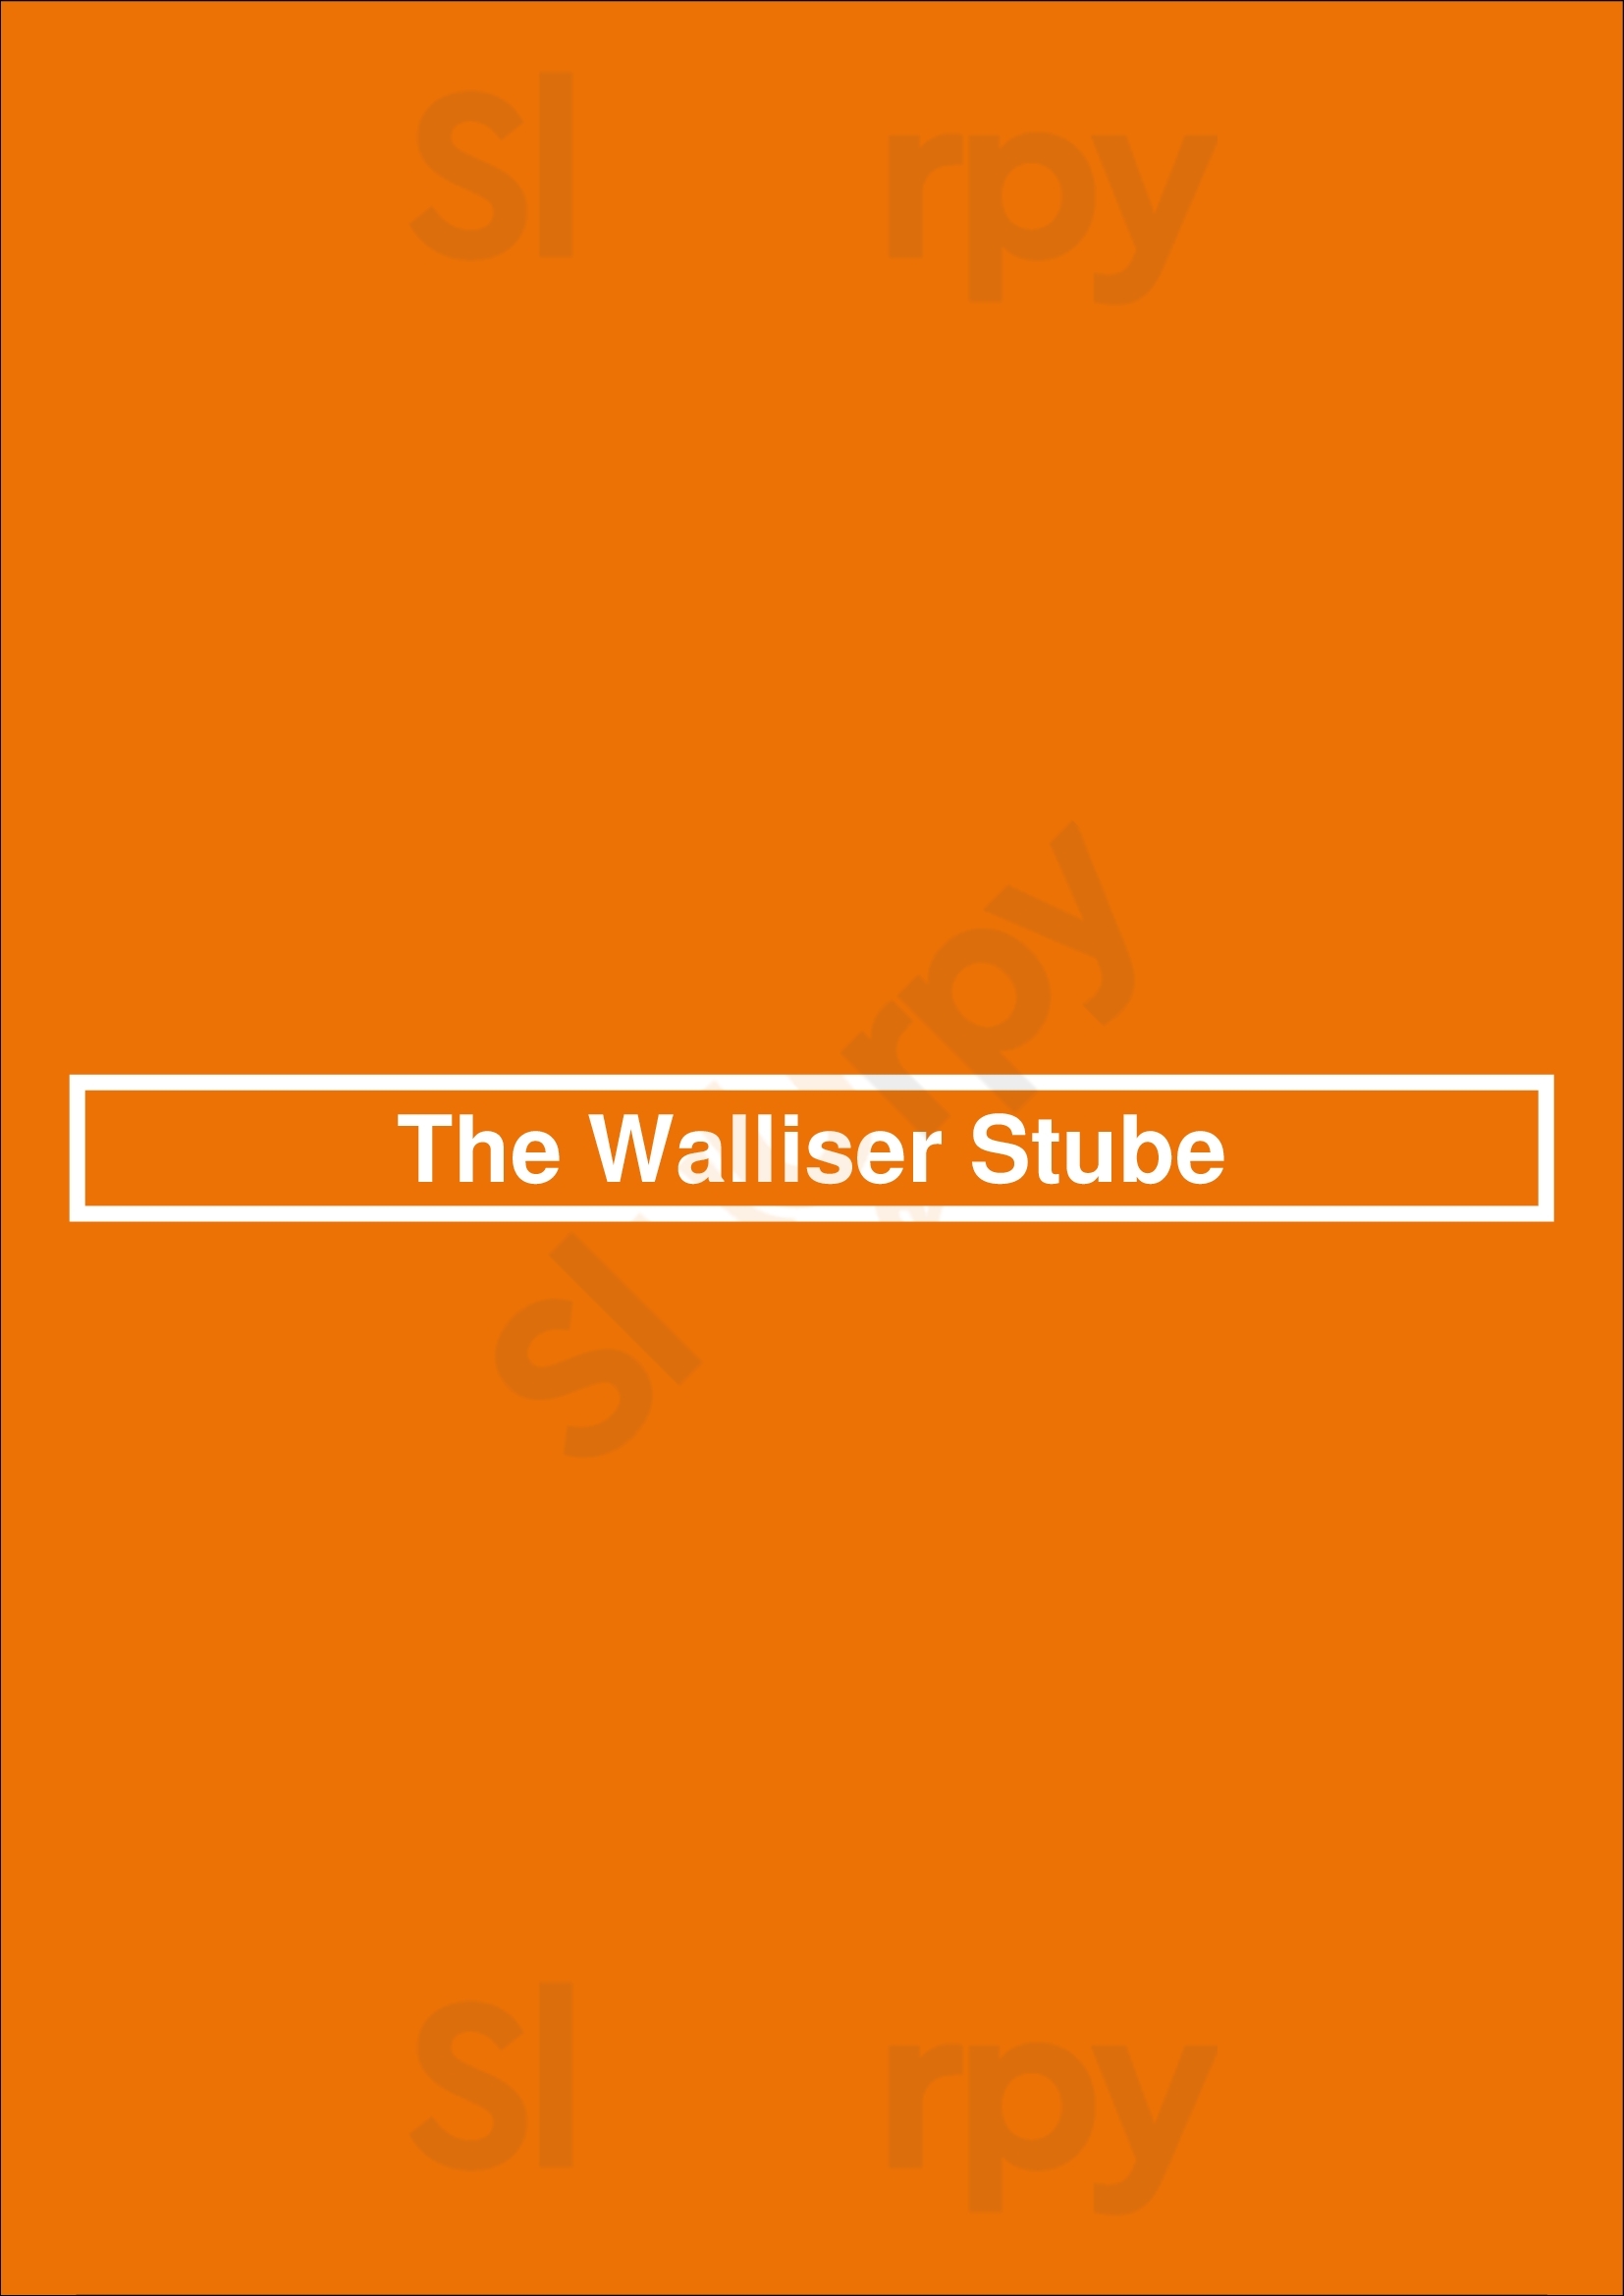 The Walliser Stube Lake Louise Menu - 1